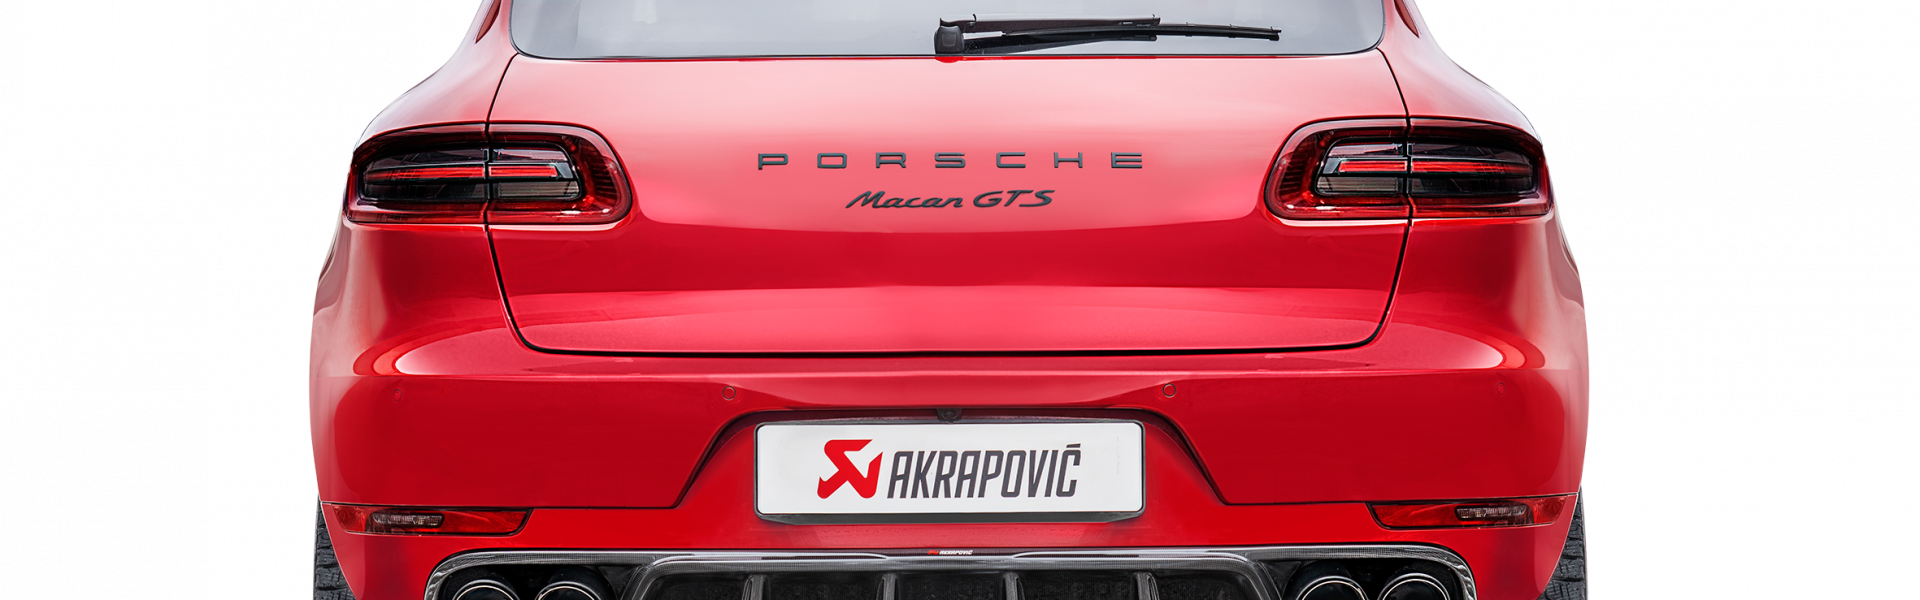 Disky kol/ pneumatiky pro automobil Porsche Macan GTS 95B